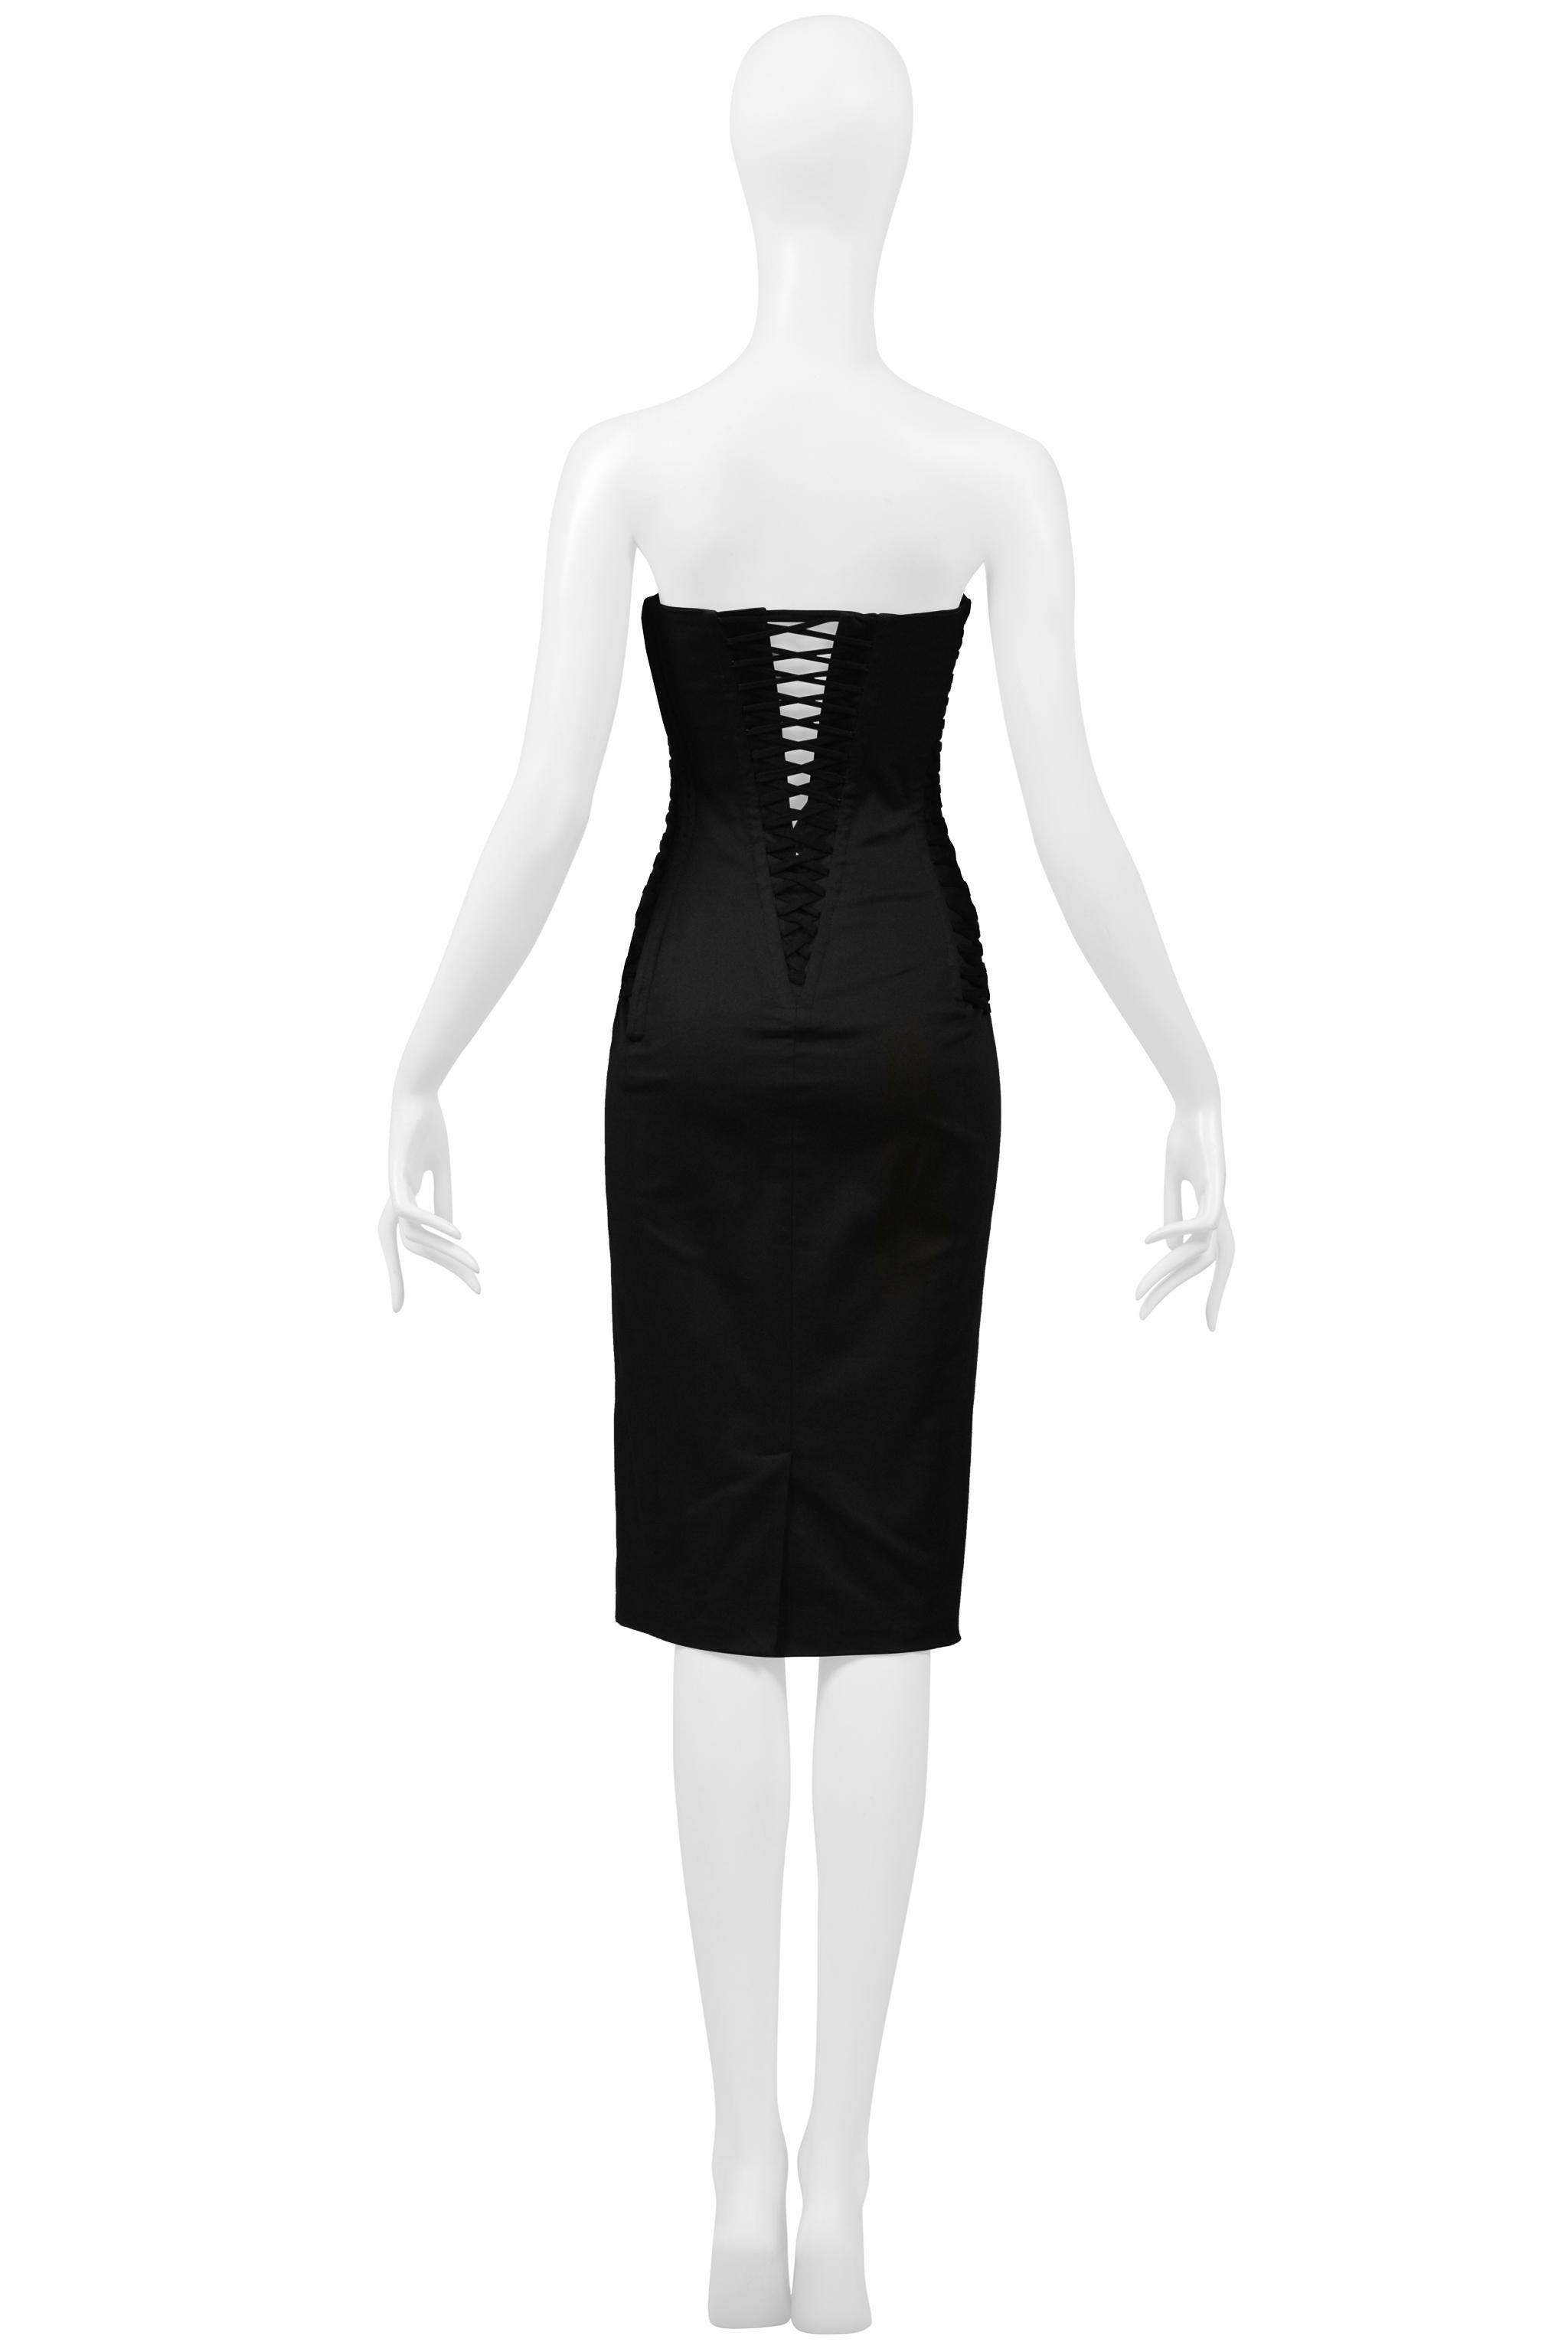 Dolce & Gabbana Black Strapless Corset Dress 2002 For Sale 2